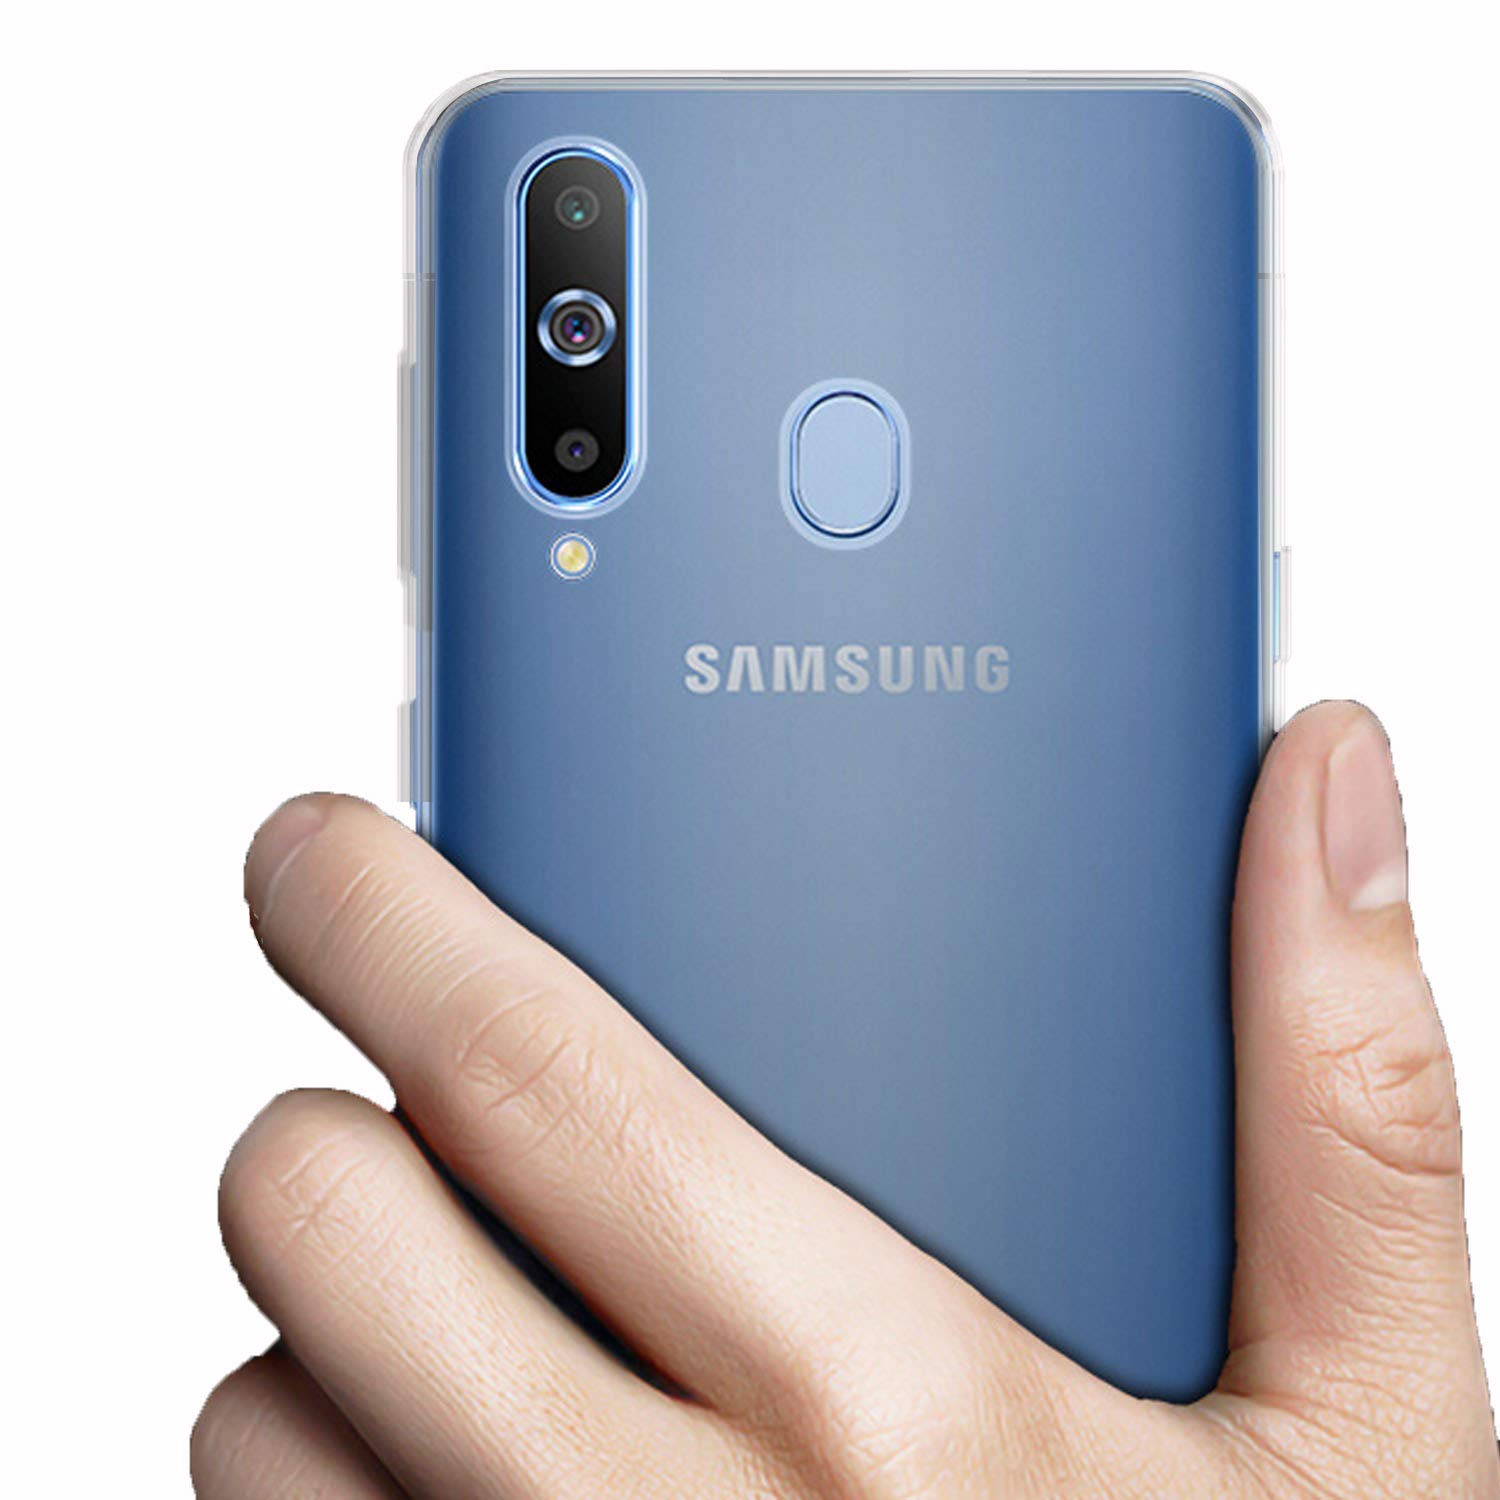 Ốp lưng dẻo silicon trong suốt cho Samsung Galaxy A8s hiệu Ultra Thin